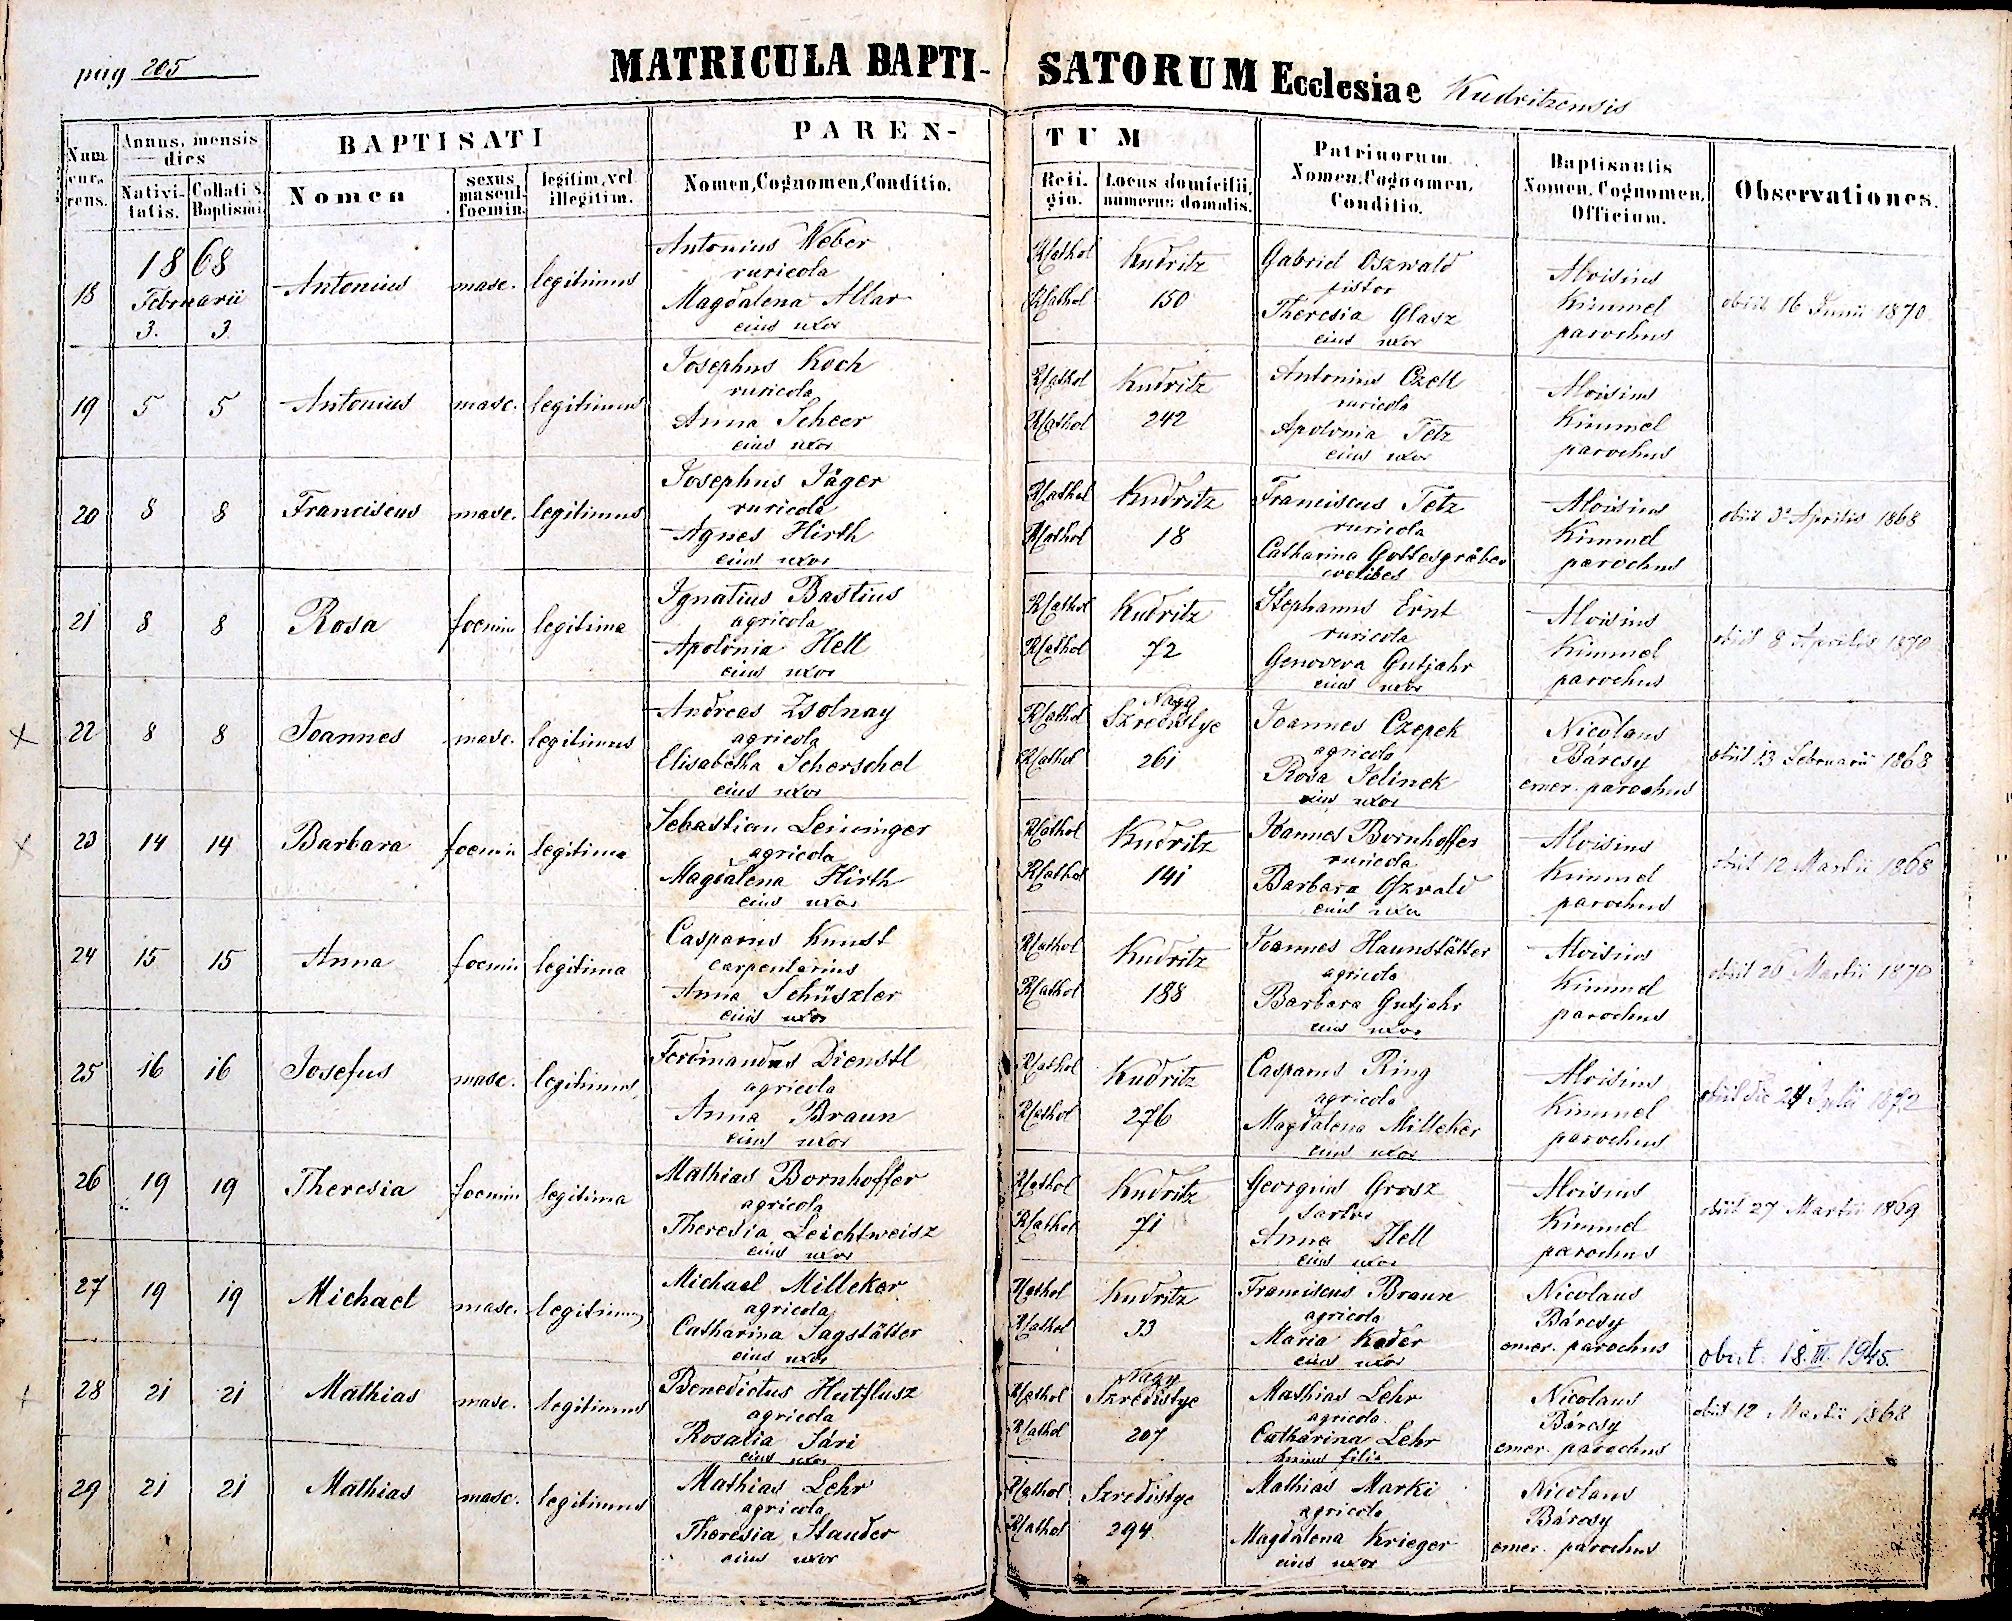 images/church_records/BIRTHS/1852-1870B/205